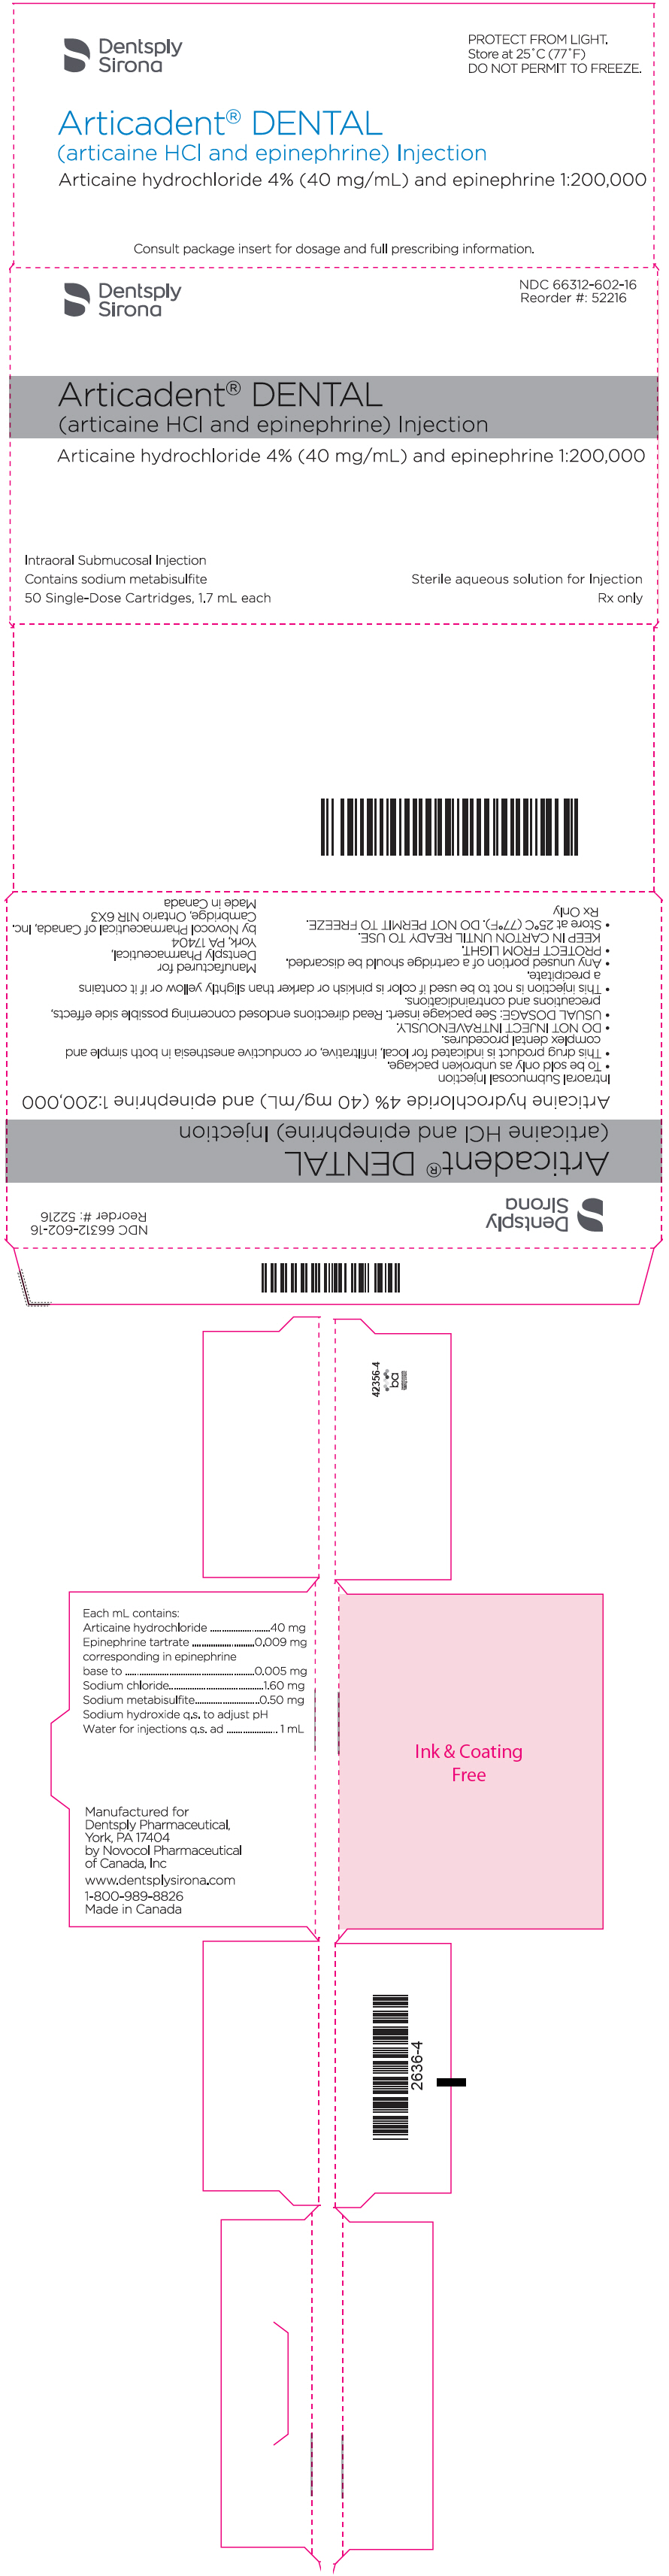 PRINCIPAL DISPLAY PANEL - 1.7 mL Cartridge Carton - epinephrine 1:200,000